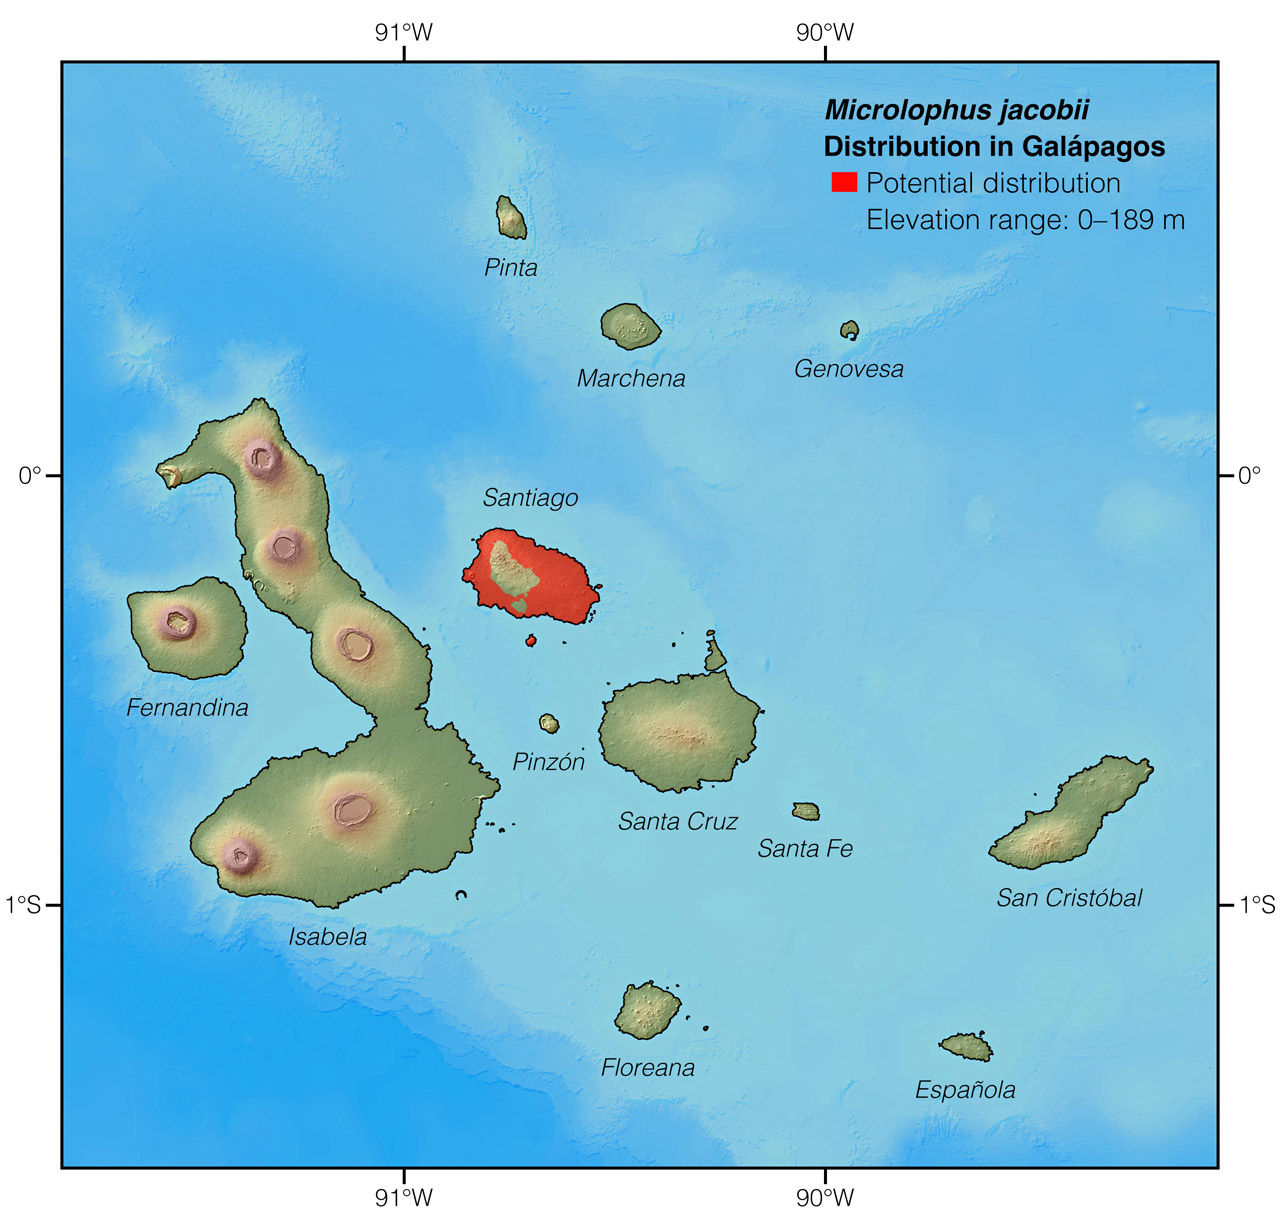 Distribution of Microlophus jacobii in Galápagos